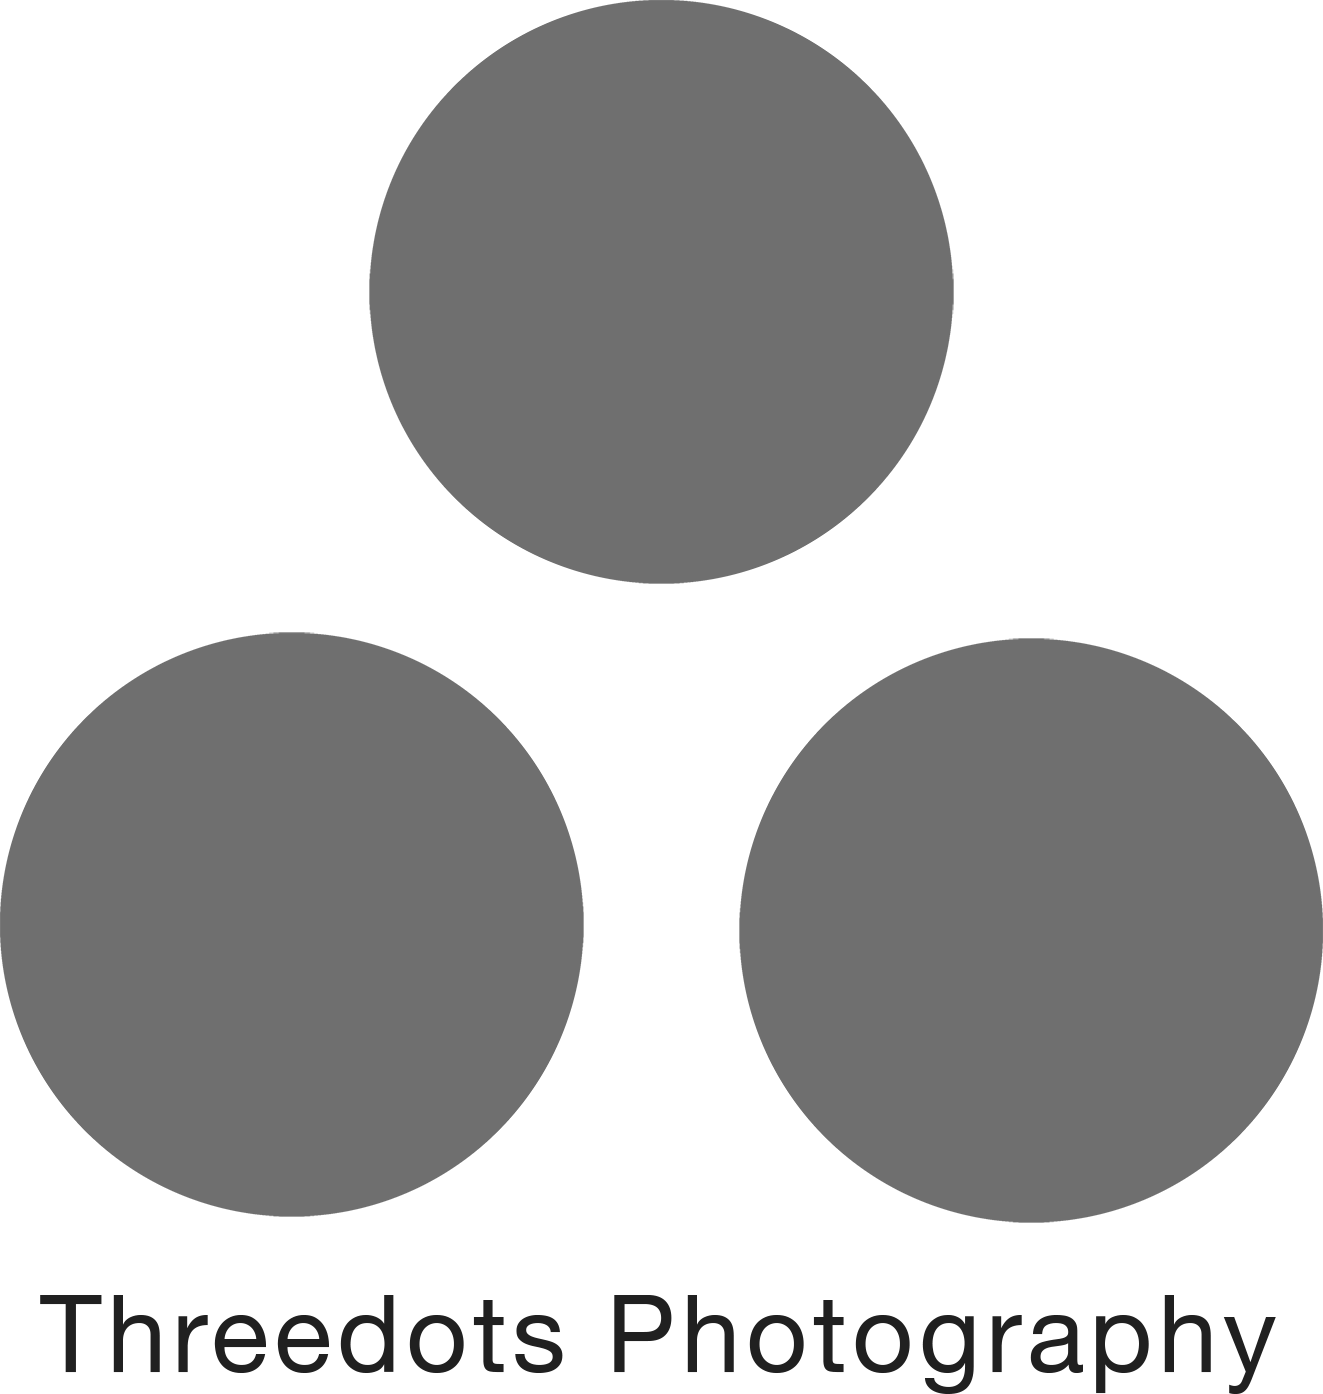 Threedots Photography